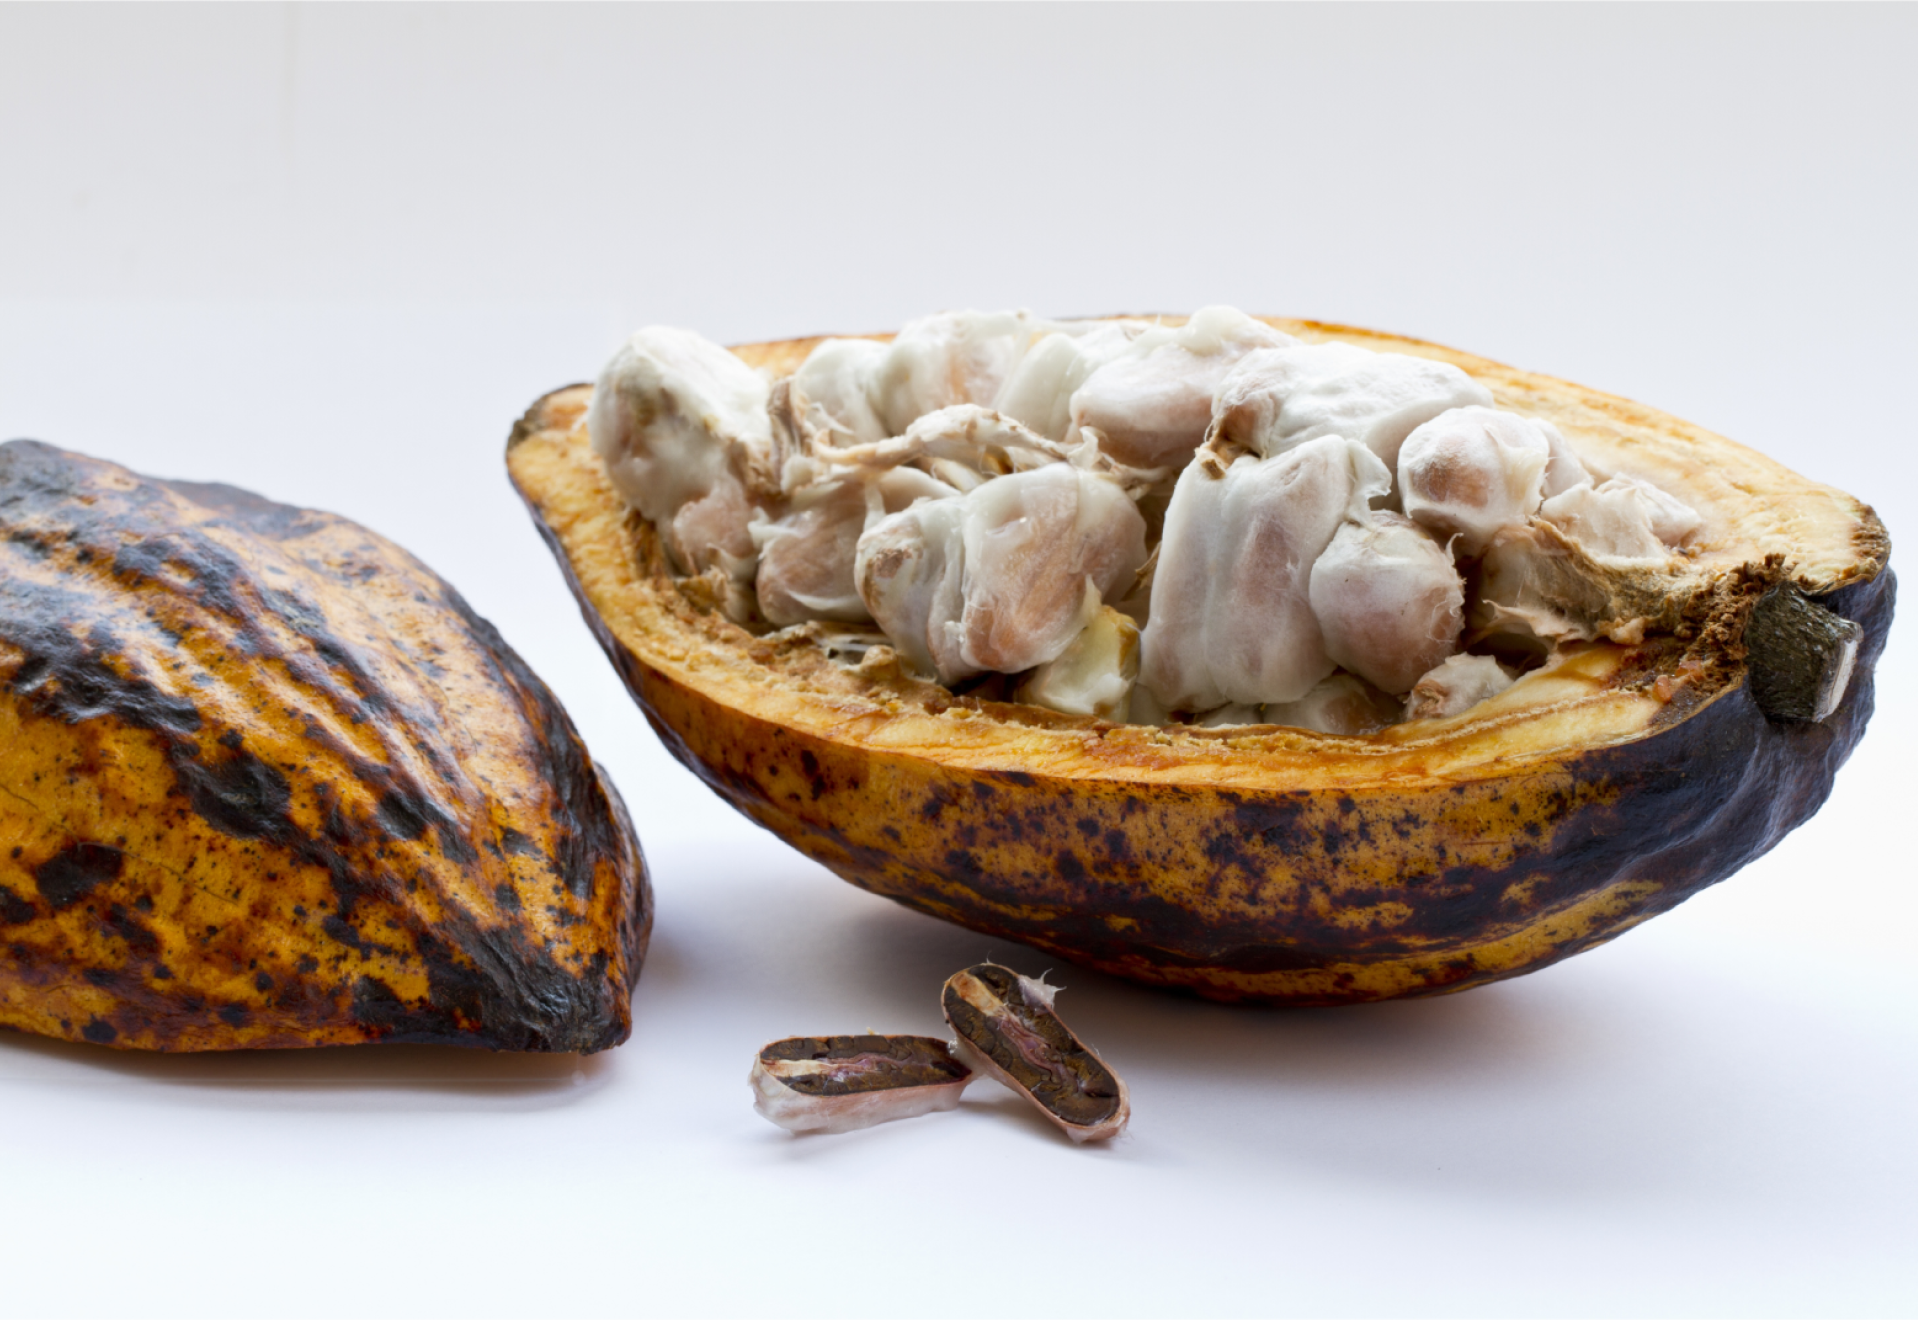 Inside of cocoa pod